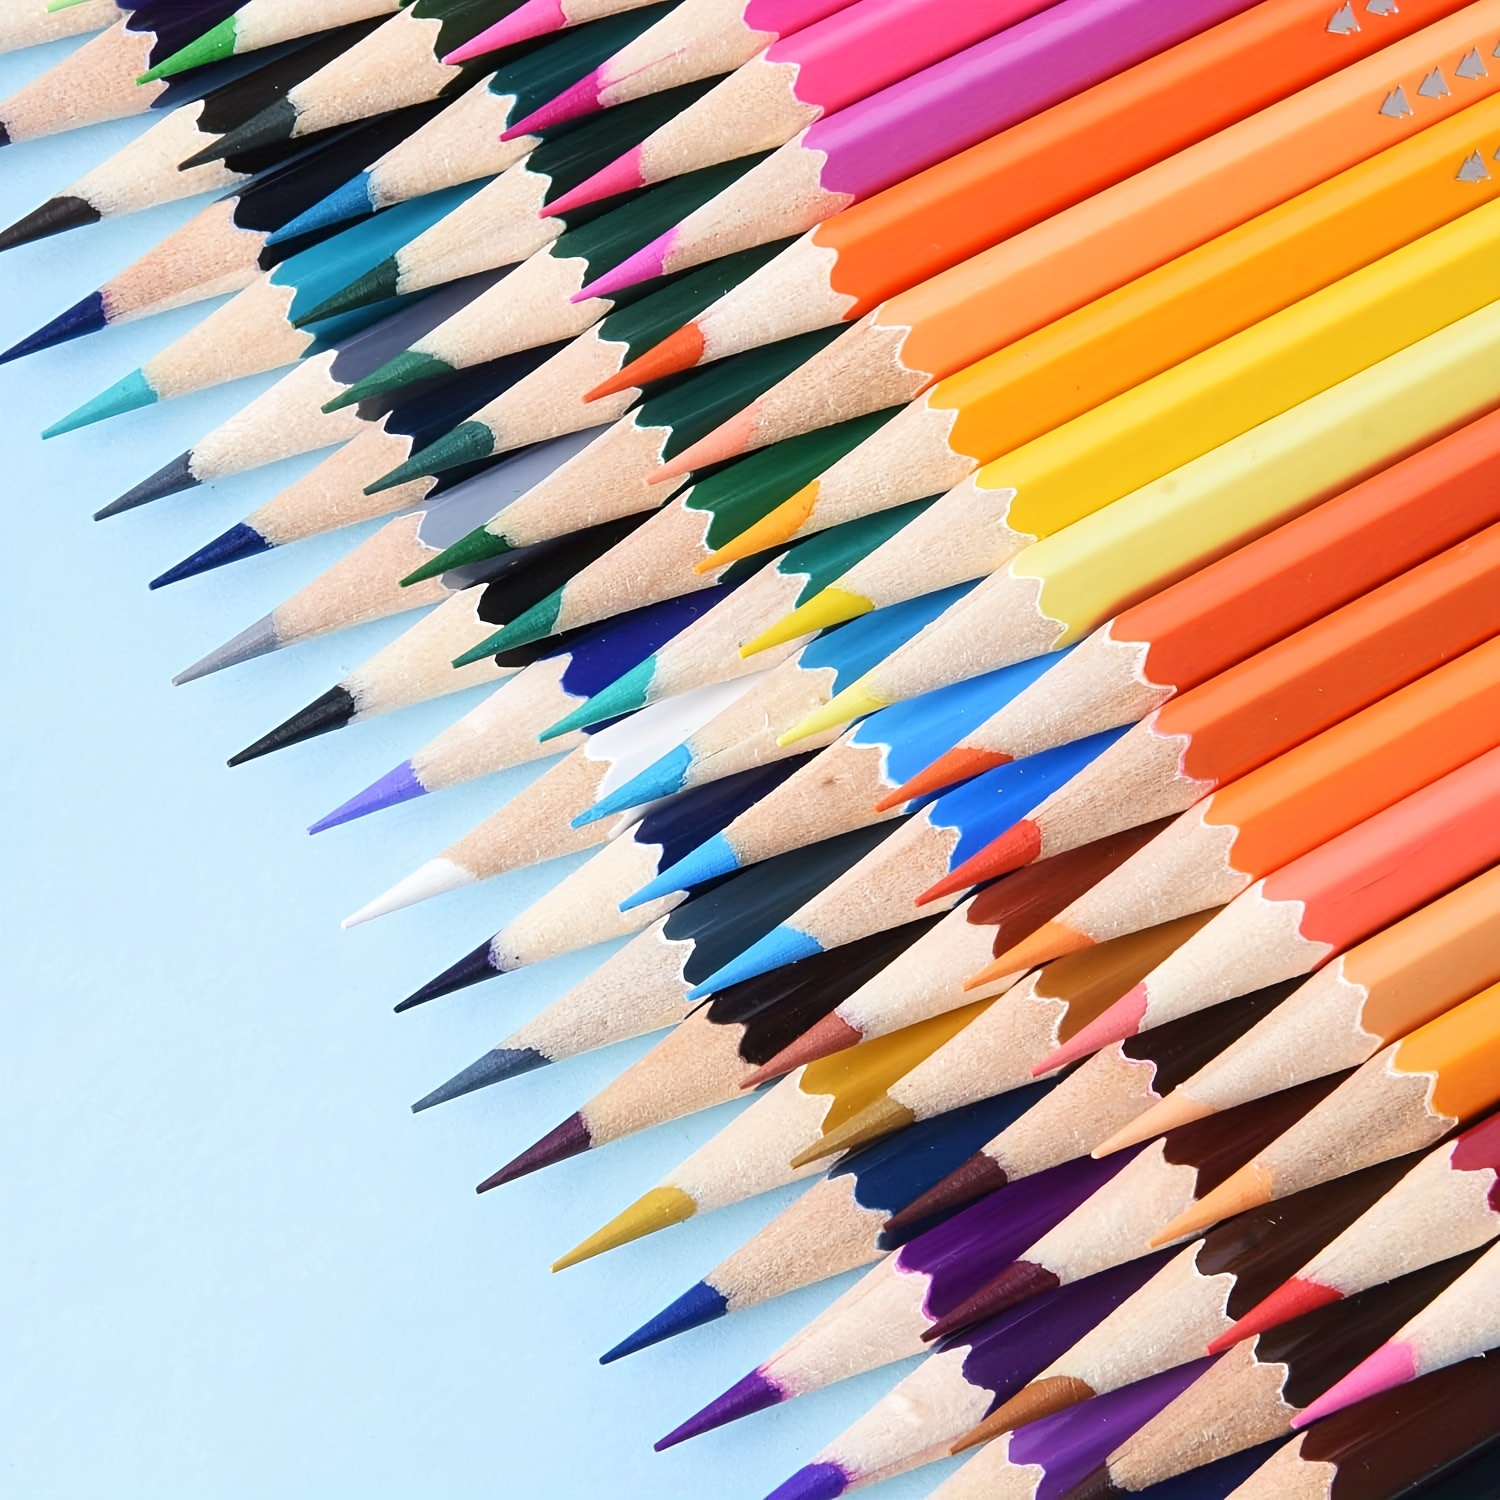 Premium 72 Color Pencils, Soft Core Coloring Set, Art Craft